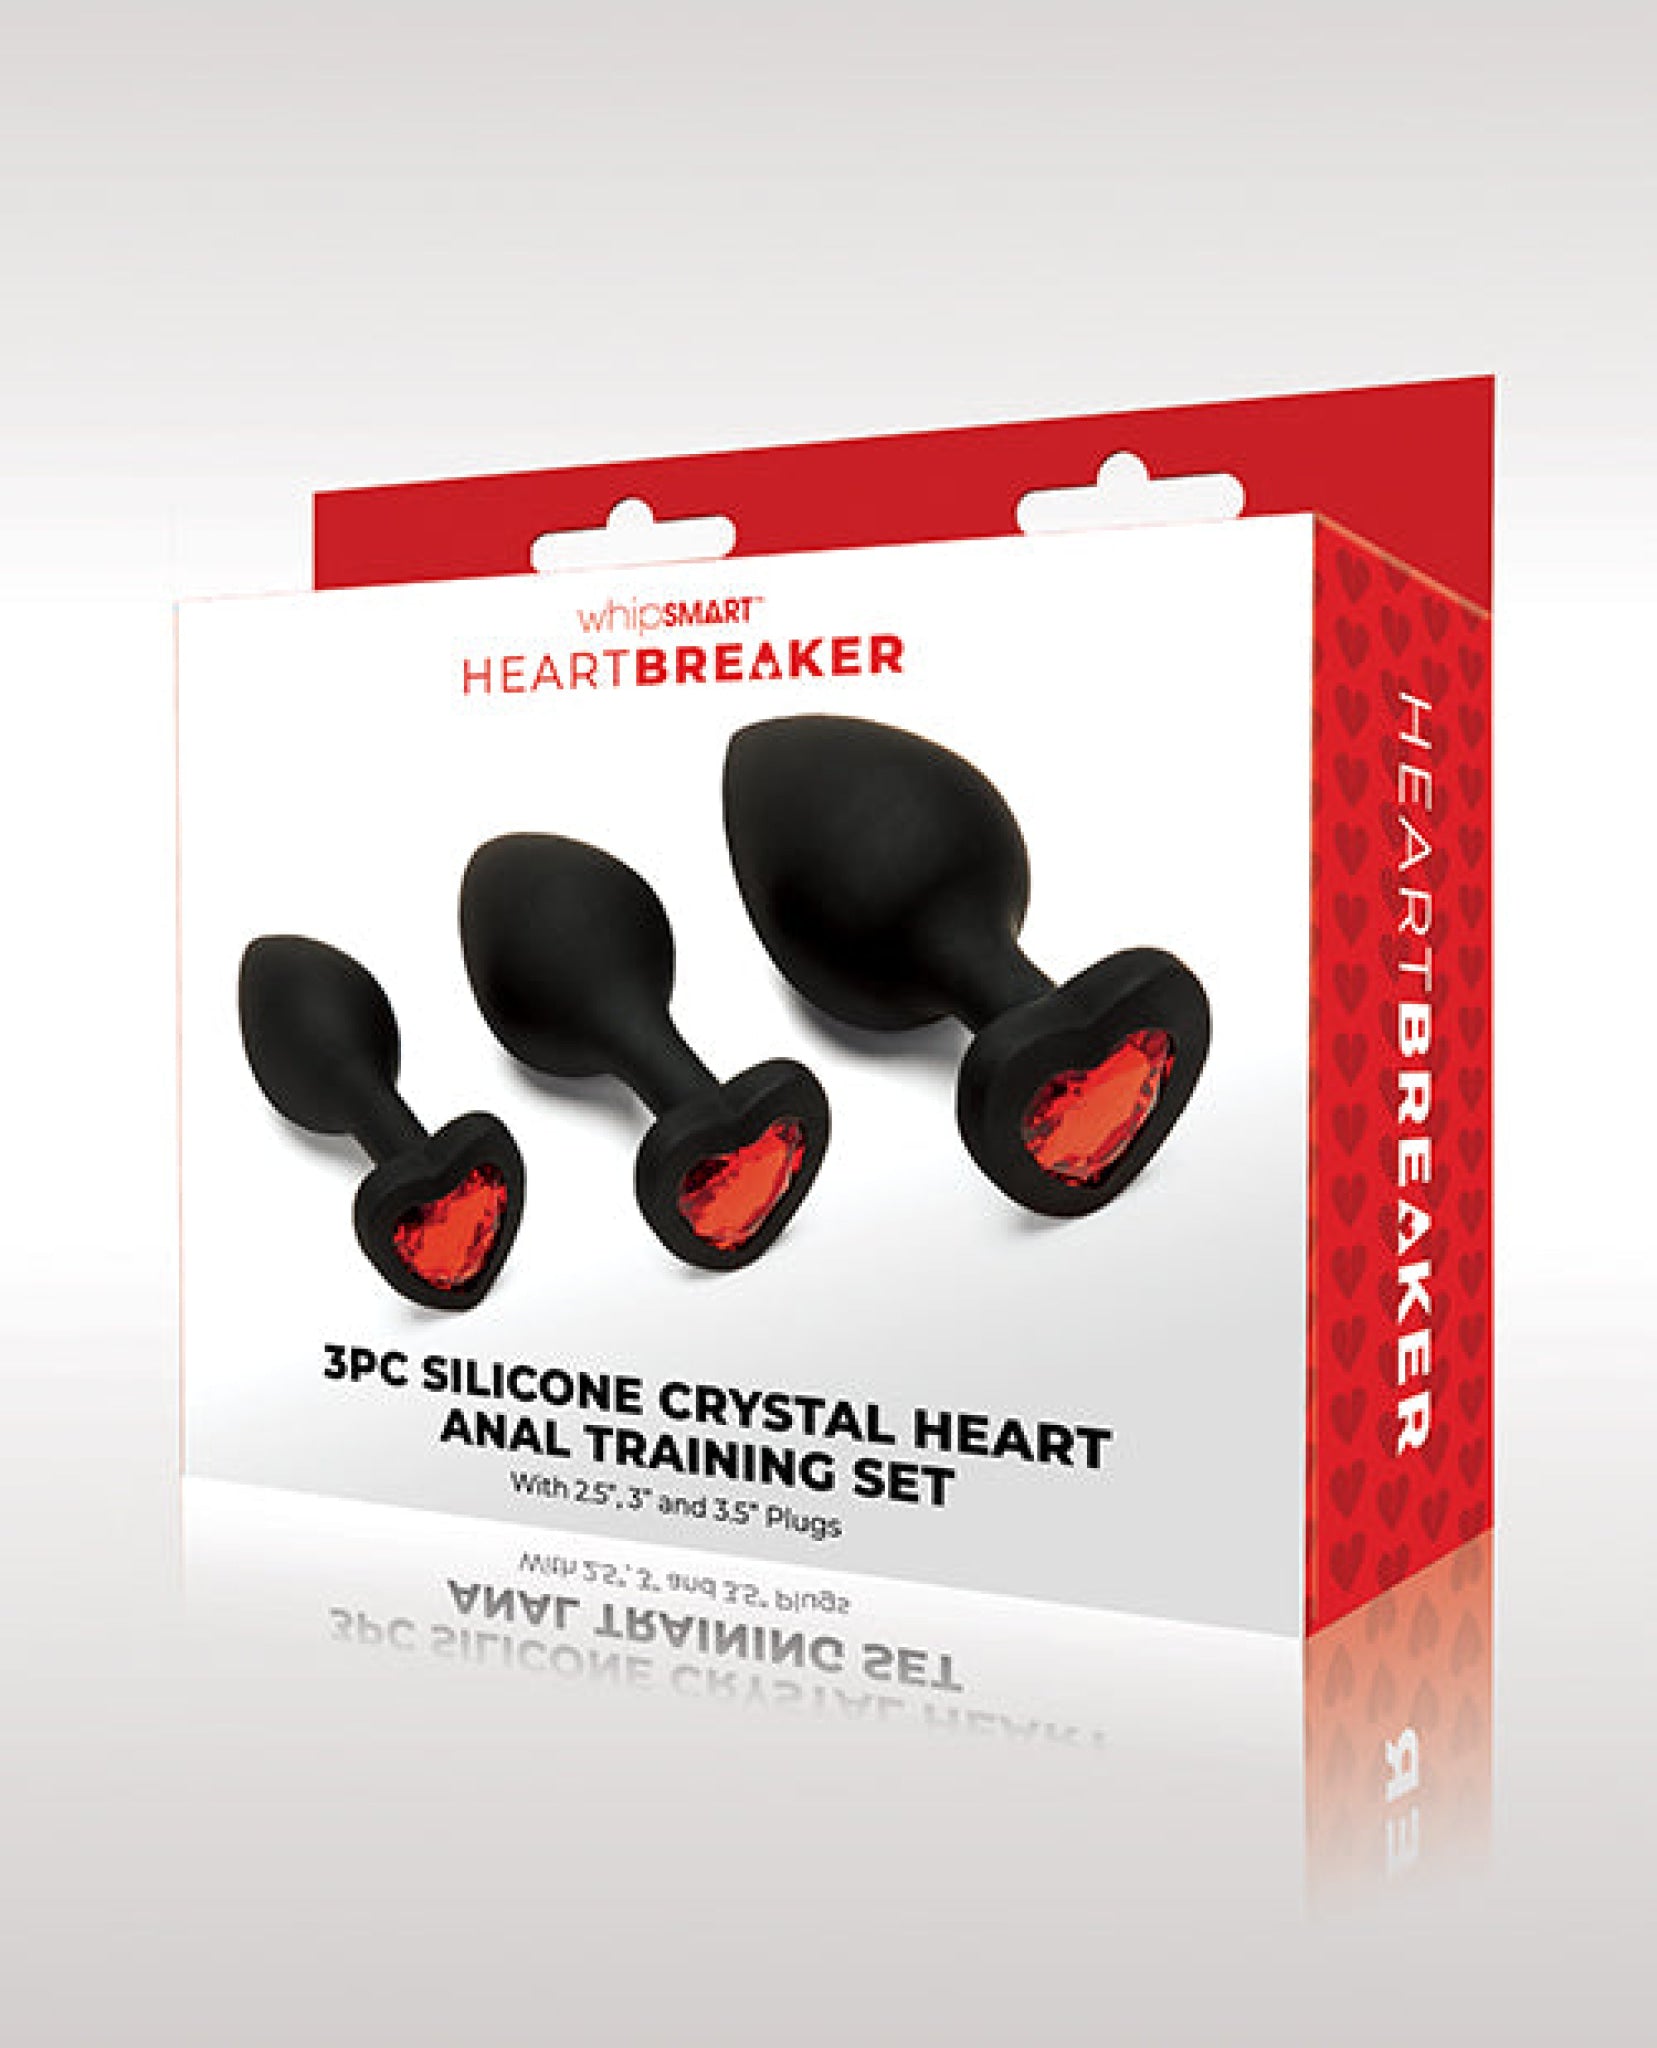 Whipsmart Heartbreaker 3 Pc Crystal Heart Anal Training Set - Black/red Xgen